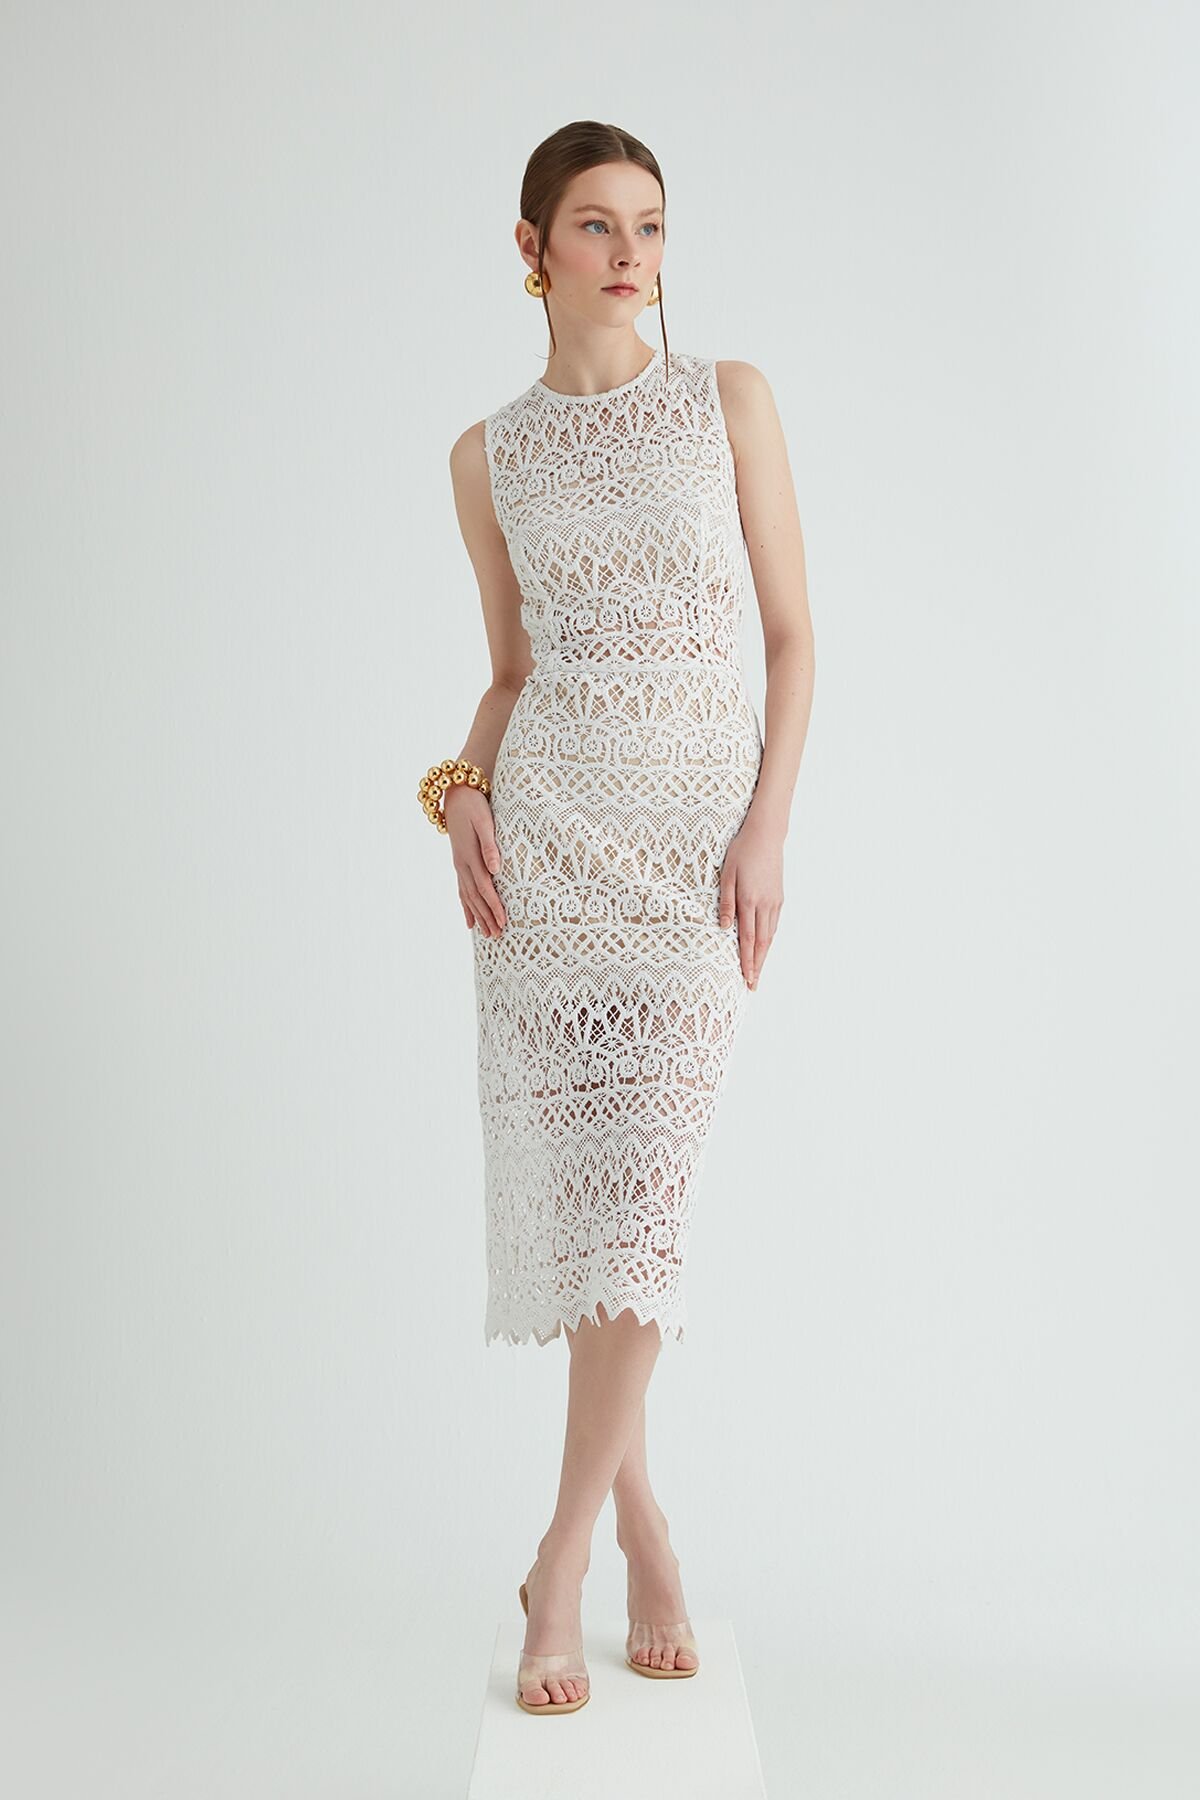 Sleeveless Midi Length White Lace Dress